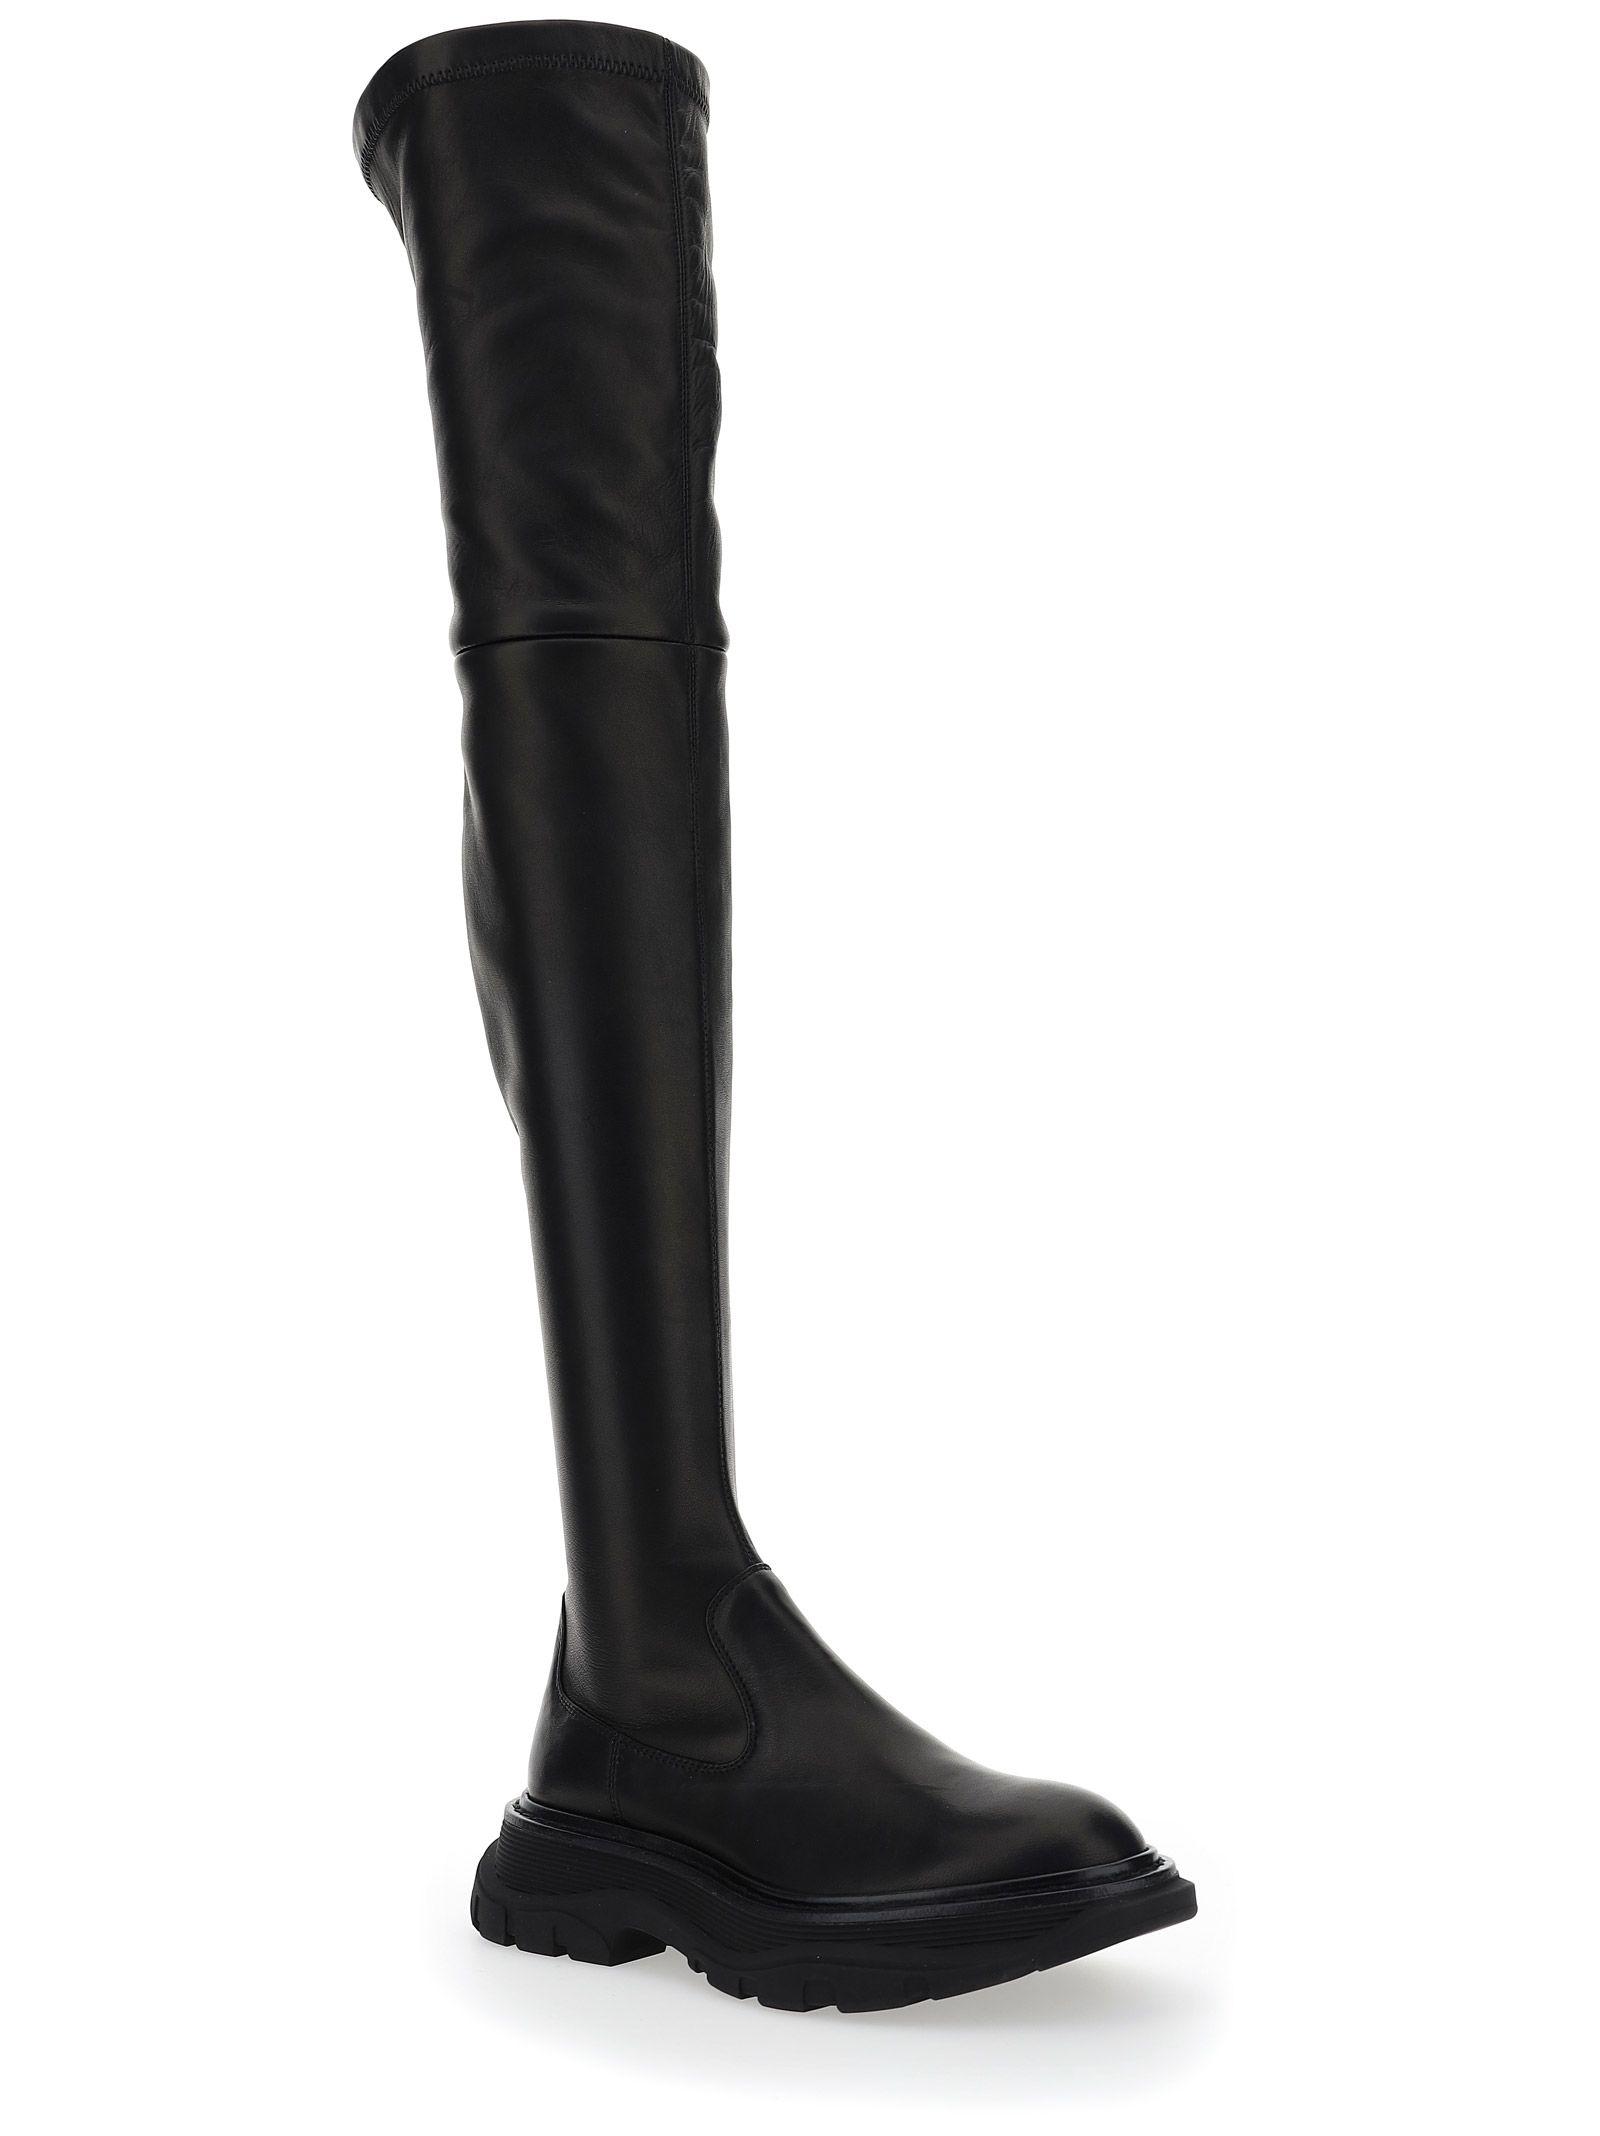 Alexander McQueen Leather Boots in Black - Lyst